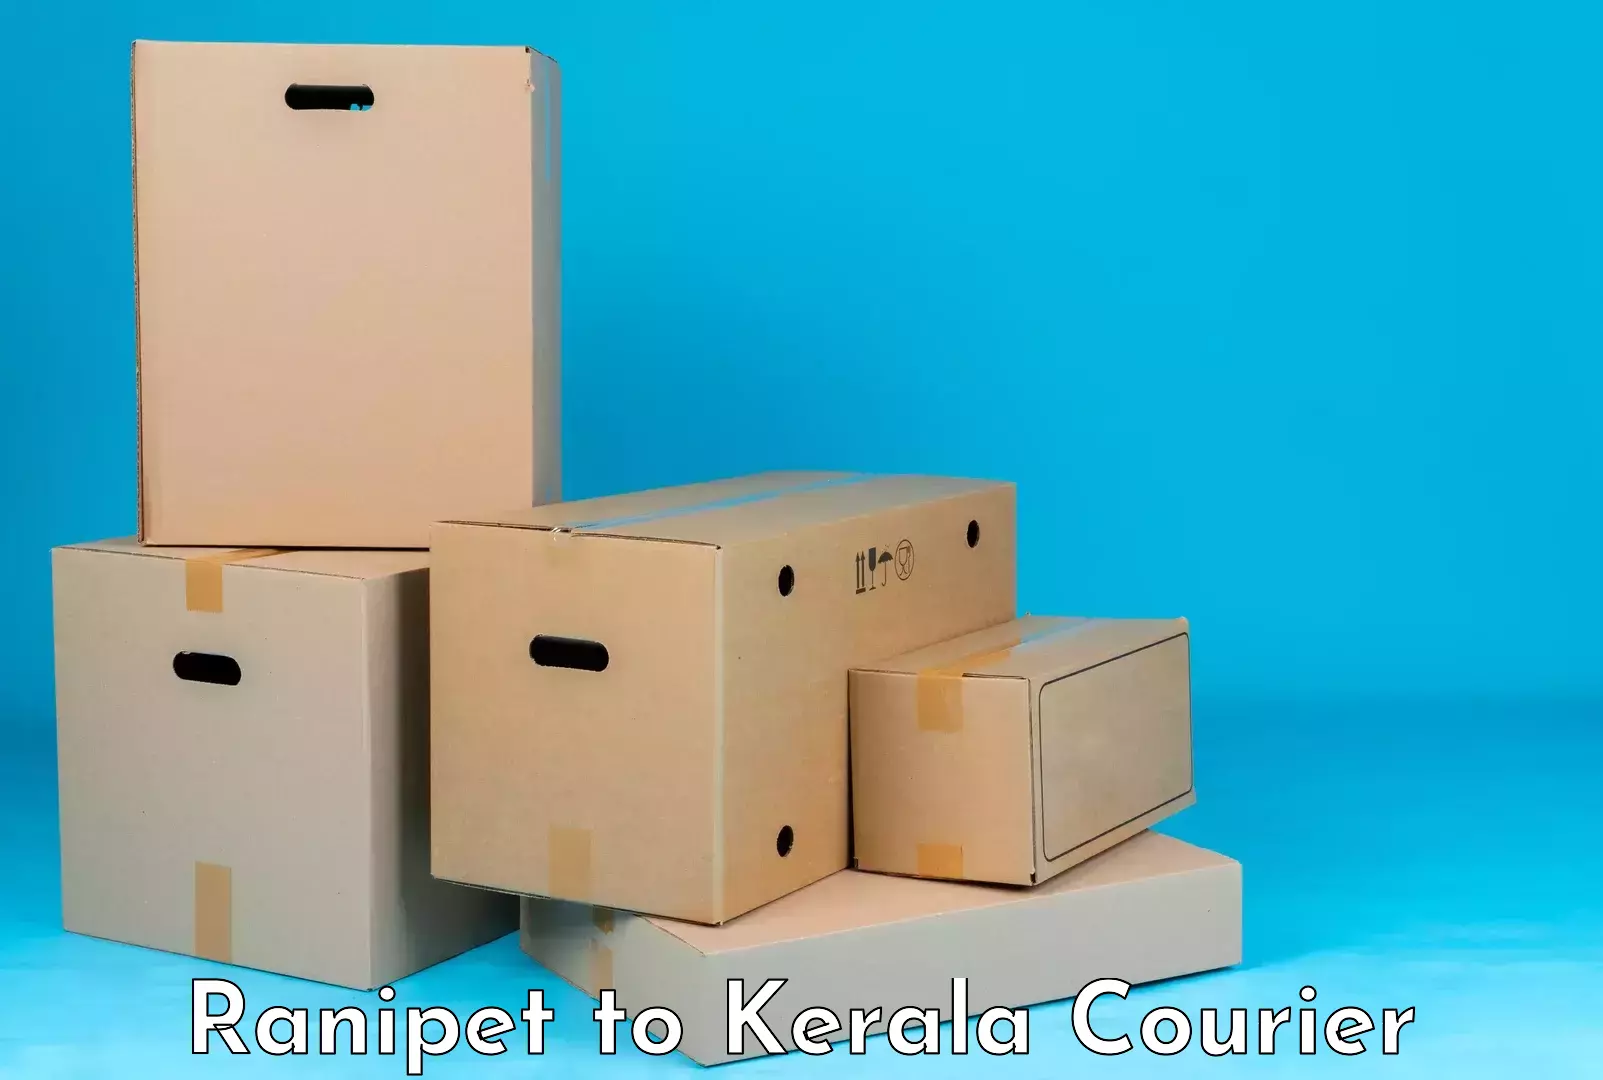 Luggage transport company Ranipet to Kerala